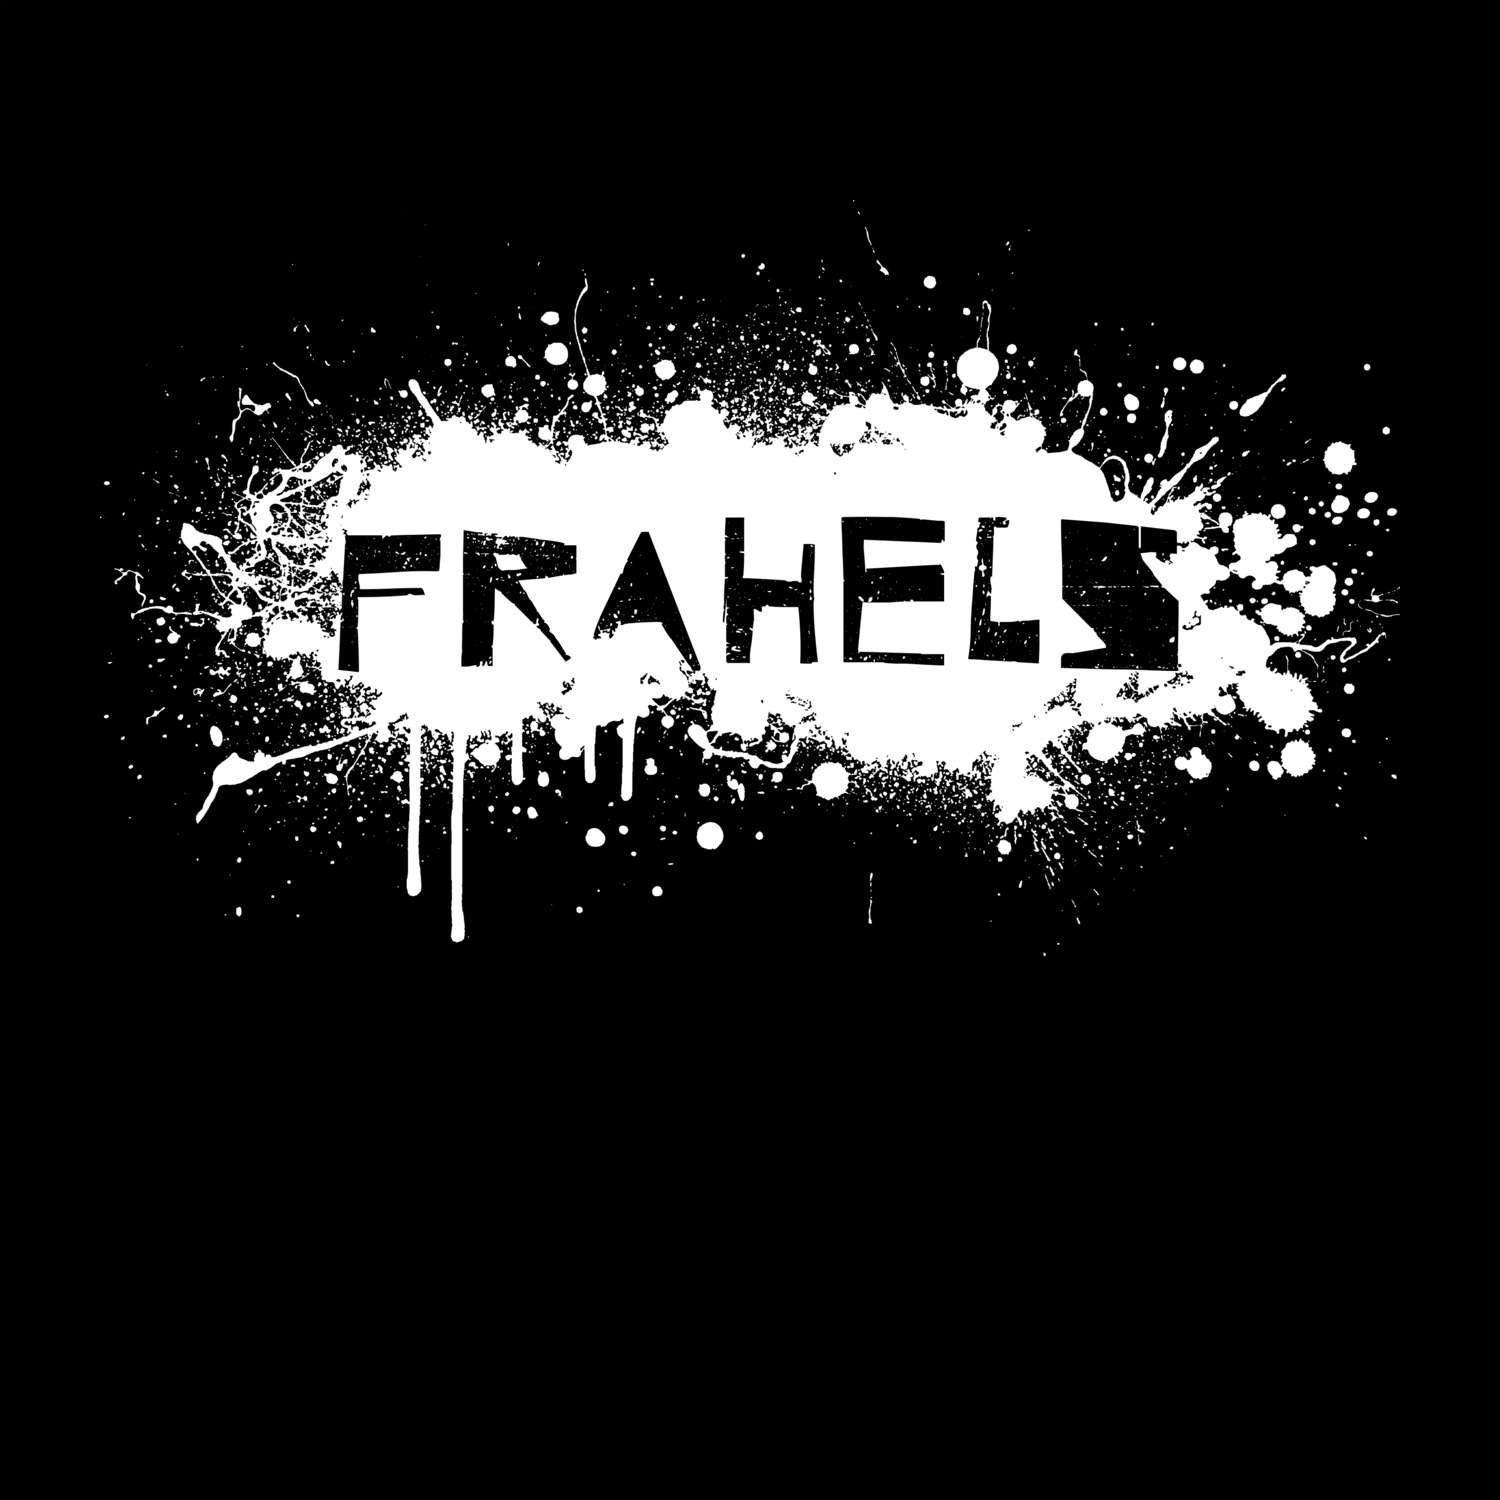 Frahels T-Shirt »Paint Splash Punk«